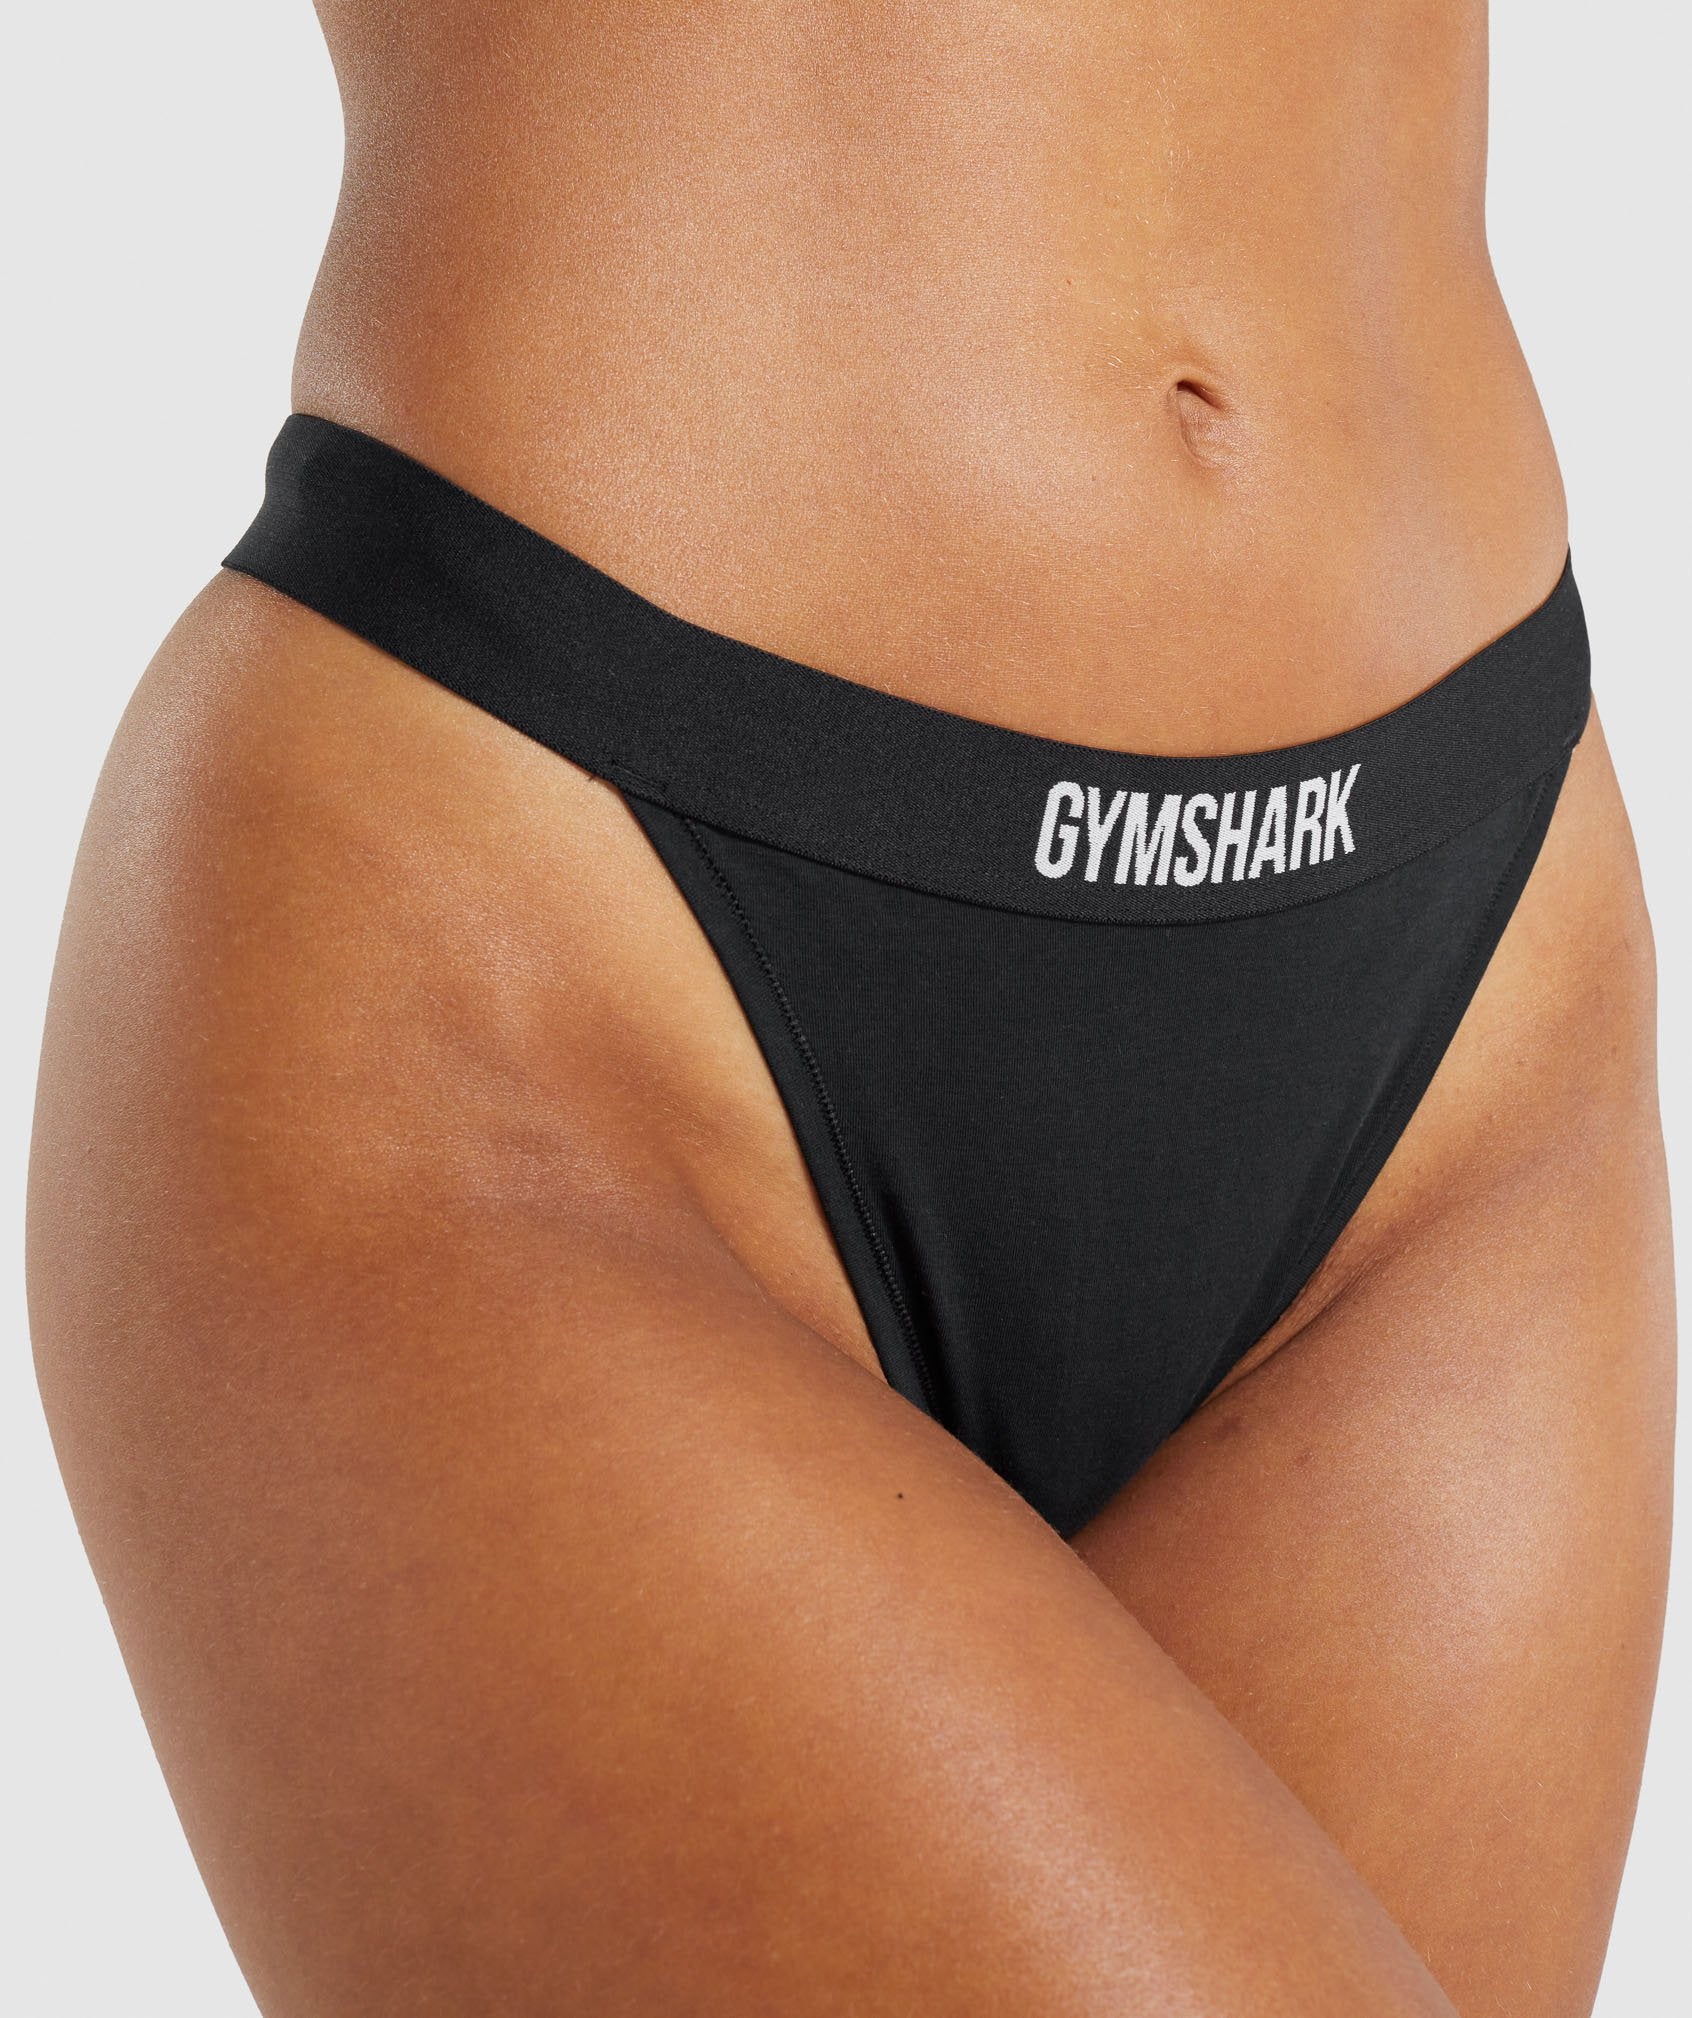 Gymshark Cotton Graphic Thong - Black